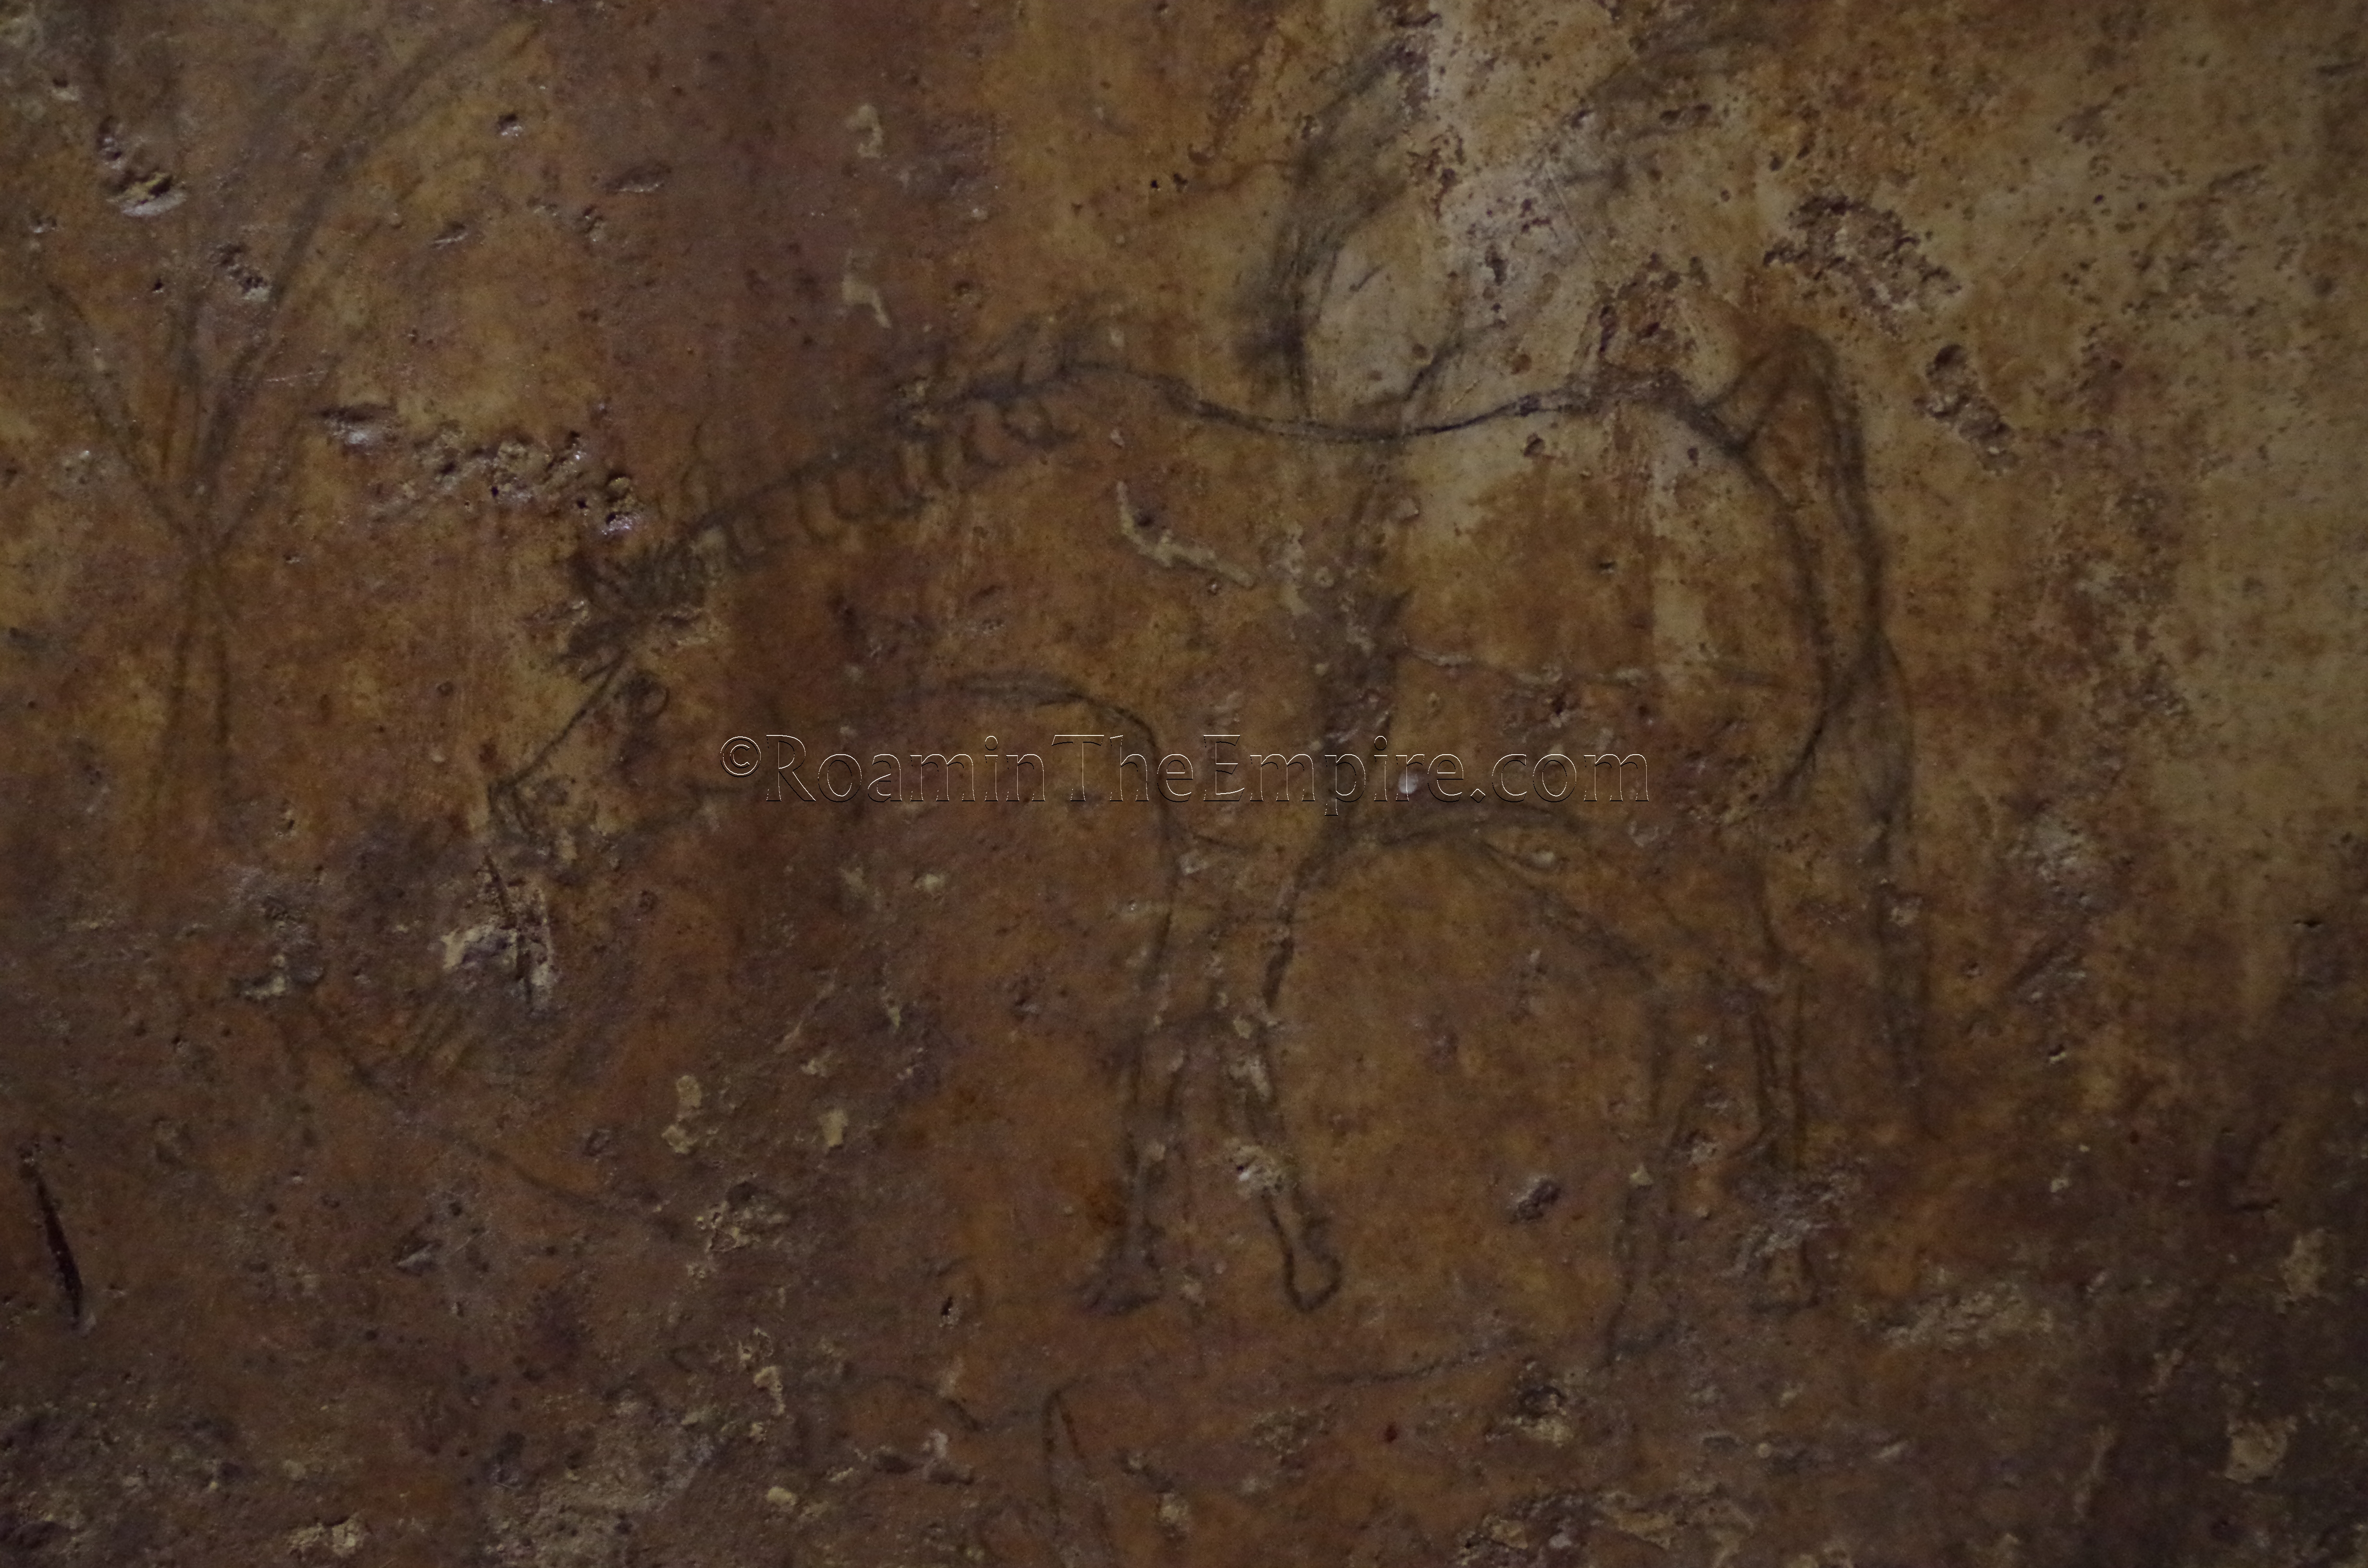 Image of Pegasus in the hypogeum of the Chiesa di San Salvatore.